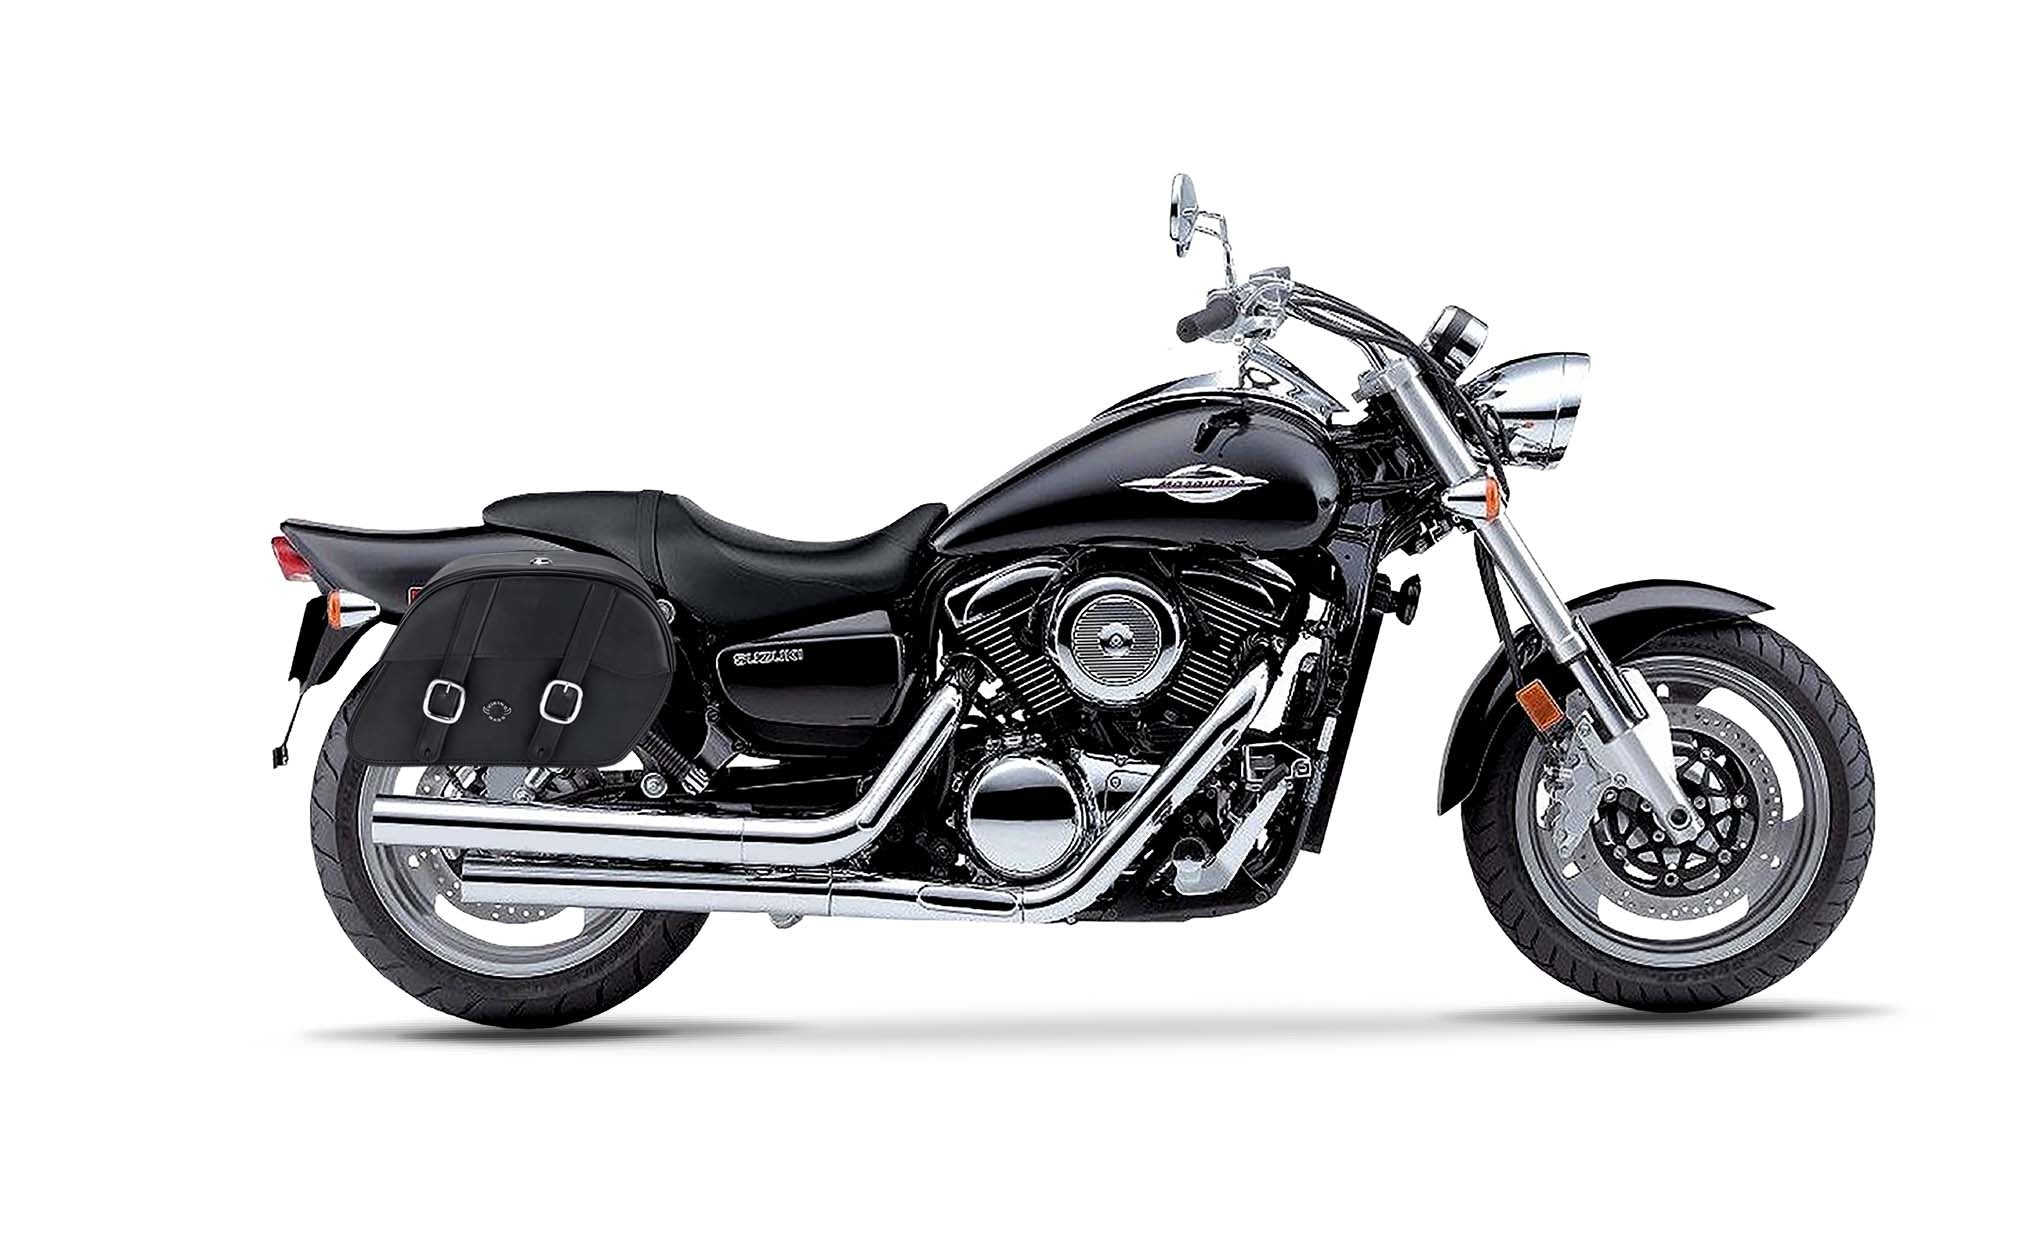 Viking Skarner Medium Lockable Suzuki Boulevard M95 Vz1600 Leather Motorcycle Saddlebags on Bike Photo @expand